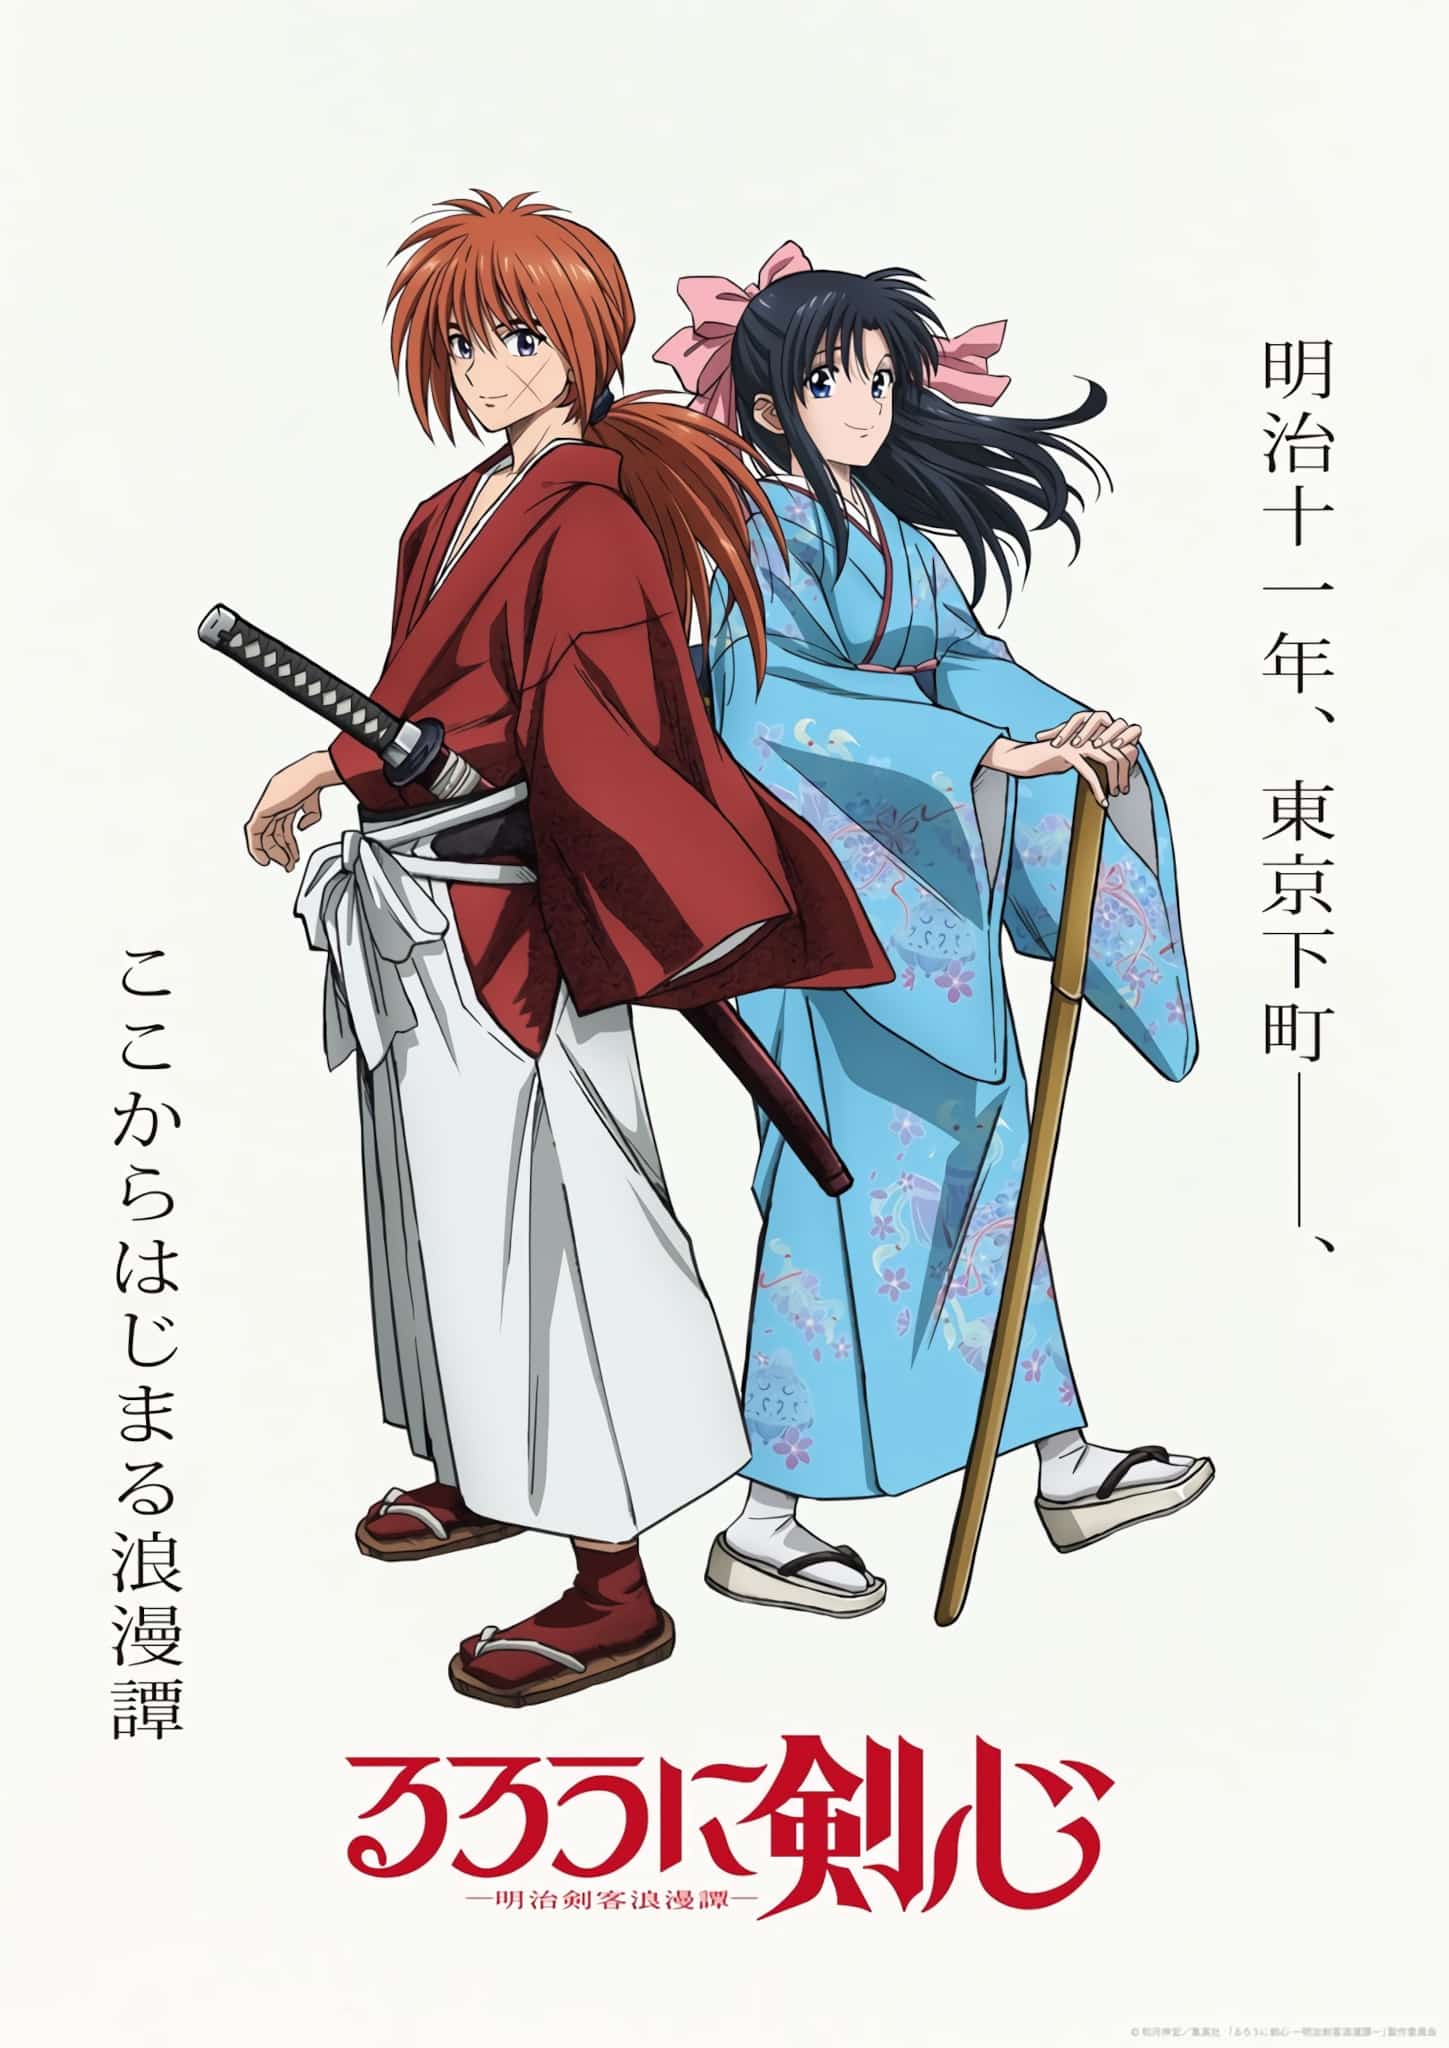 Premier visuel pour lanime Rurouni Kenshin 2023